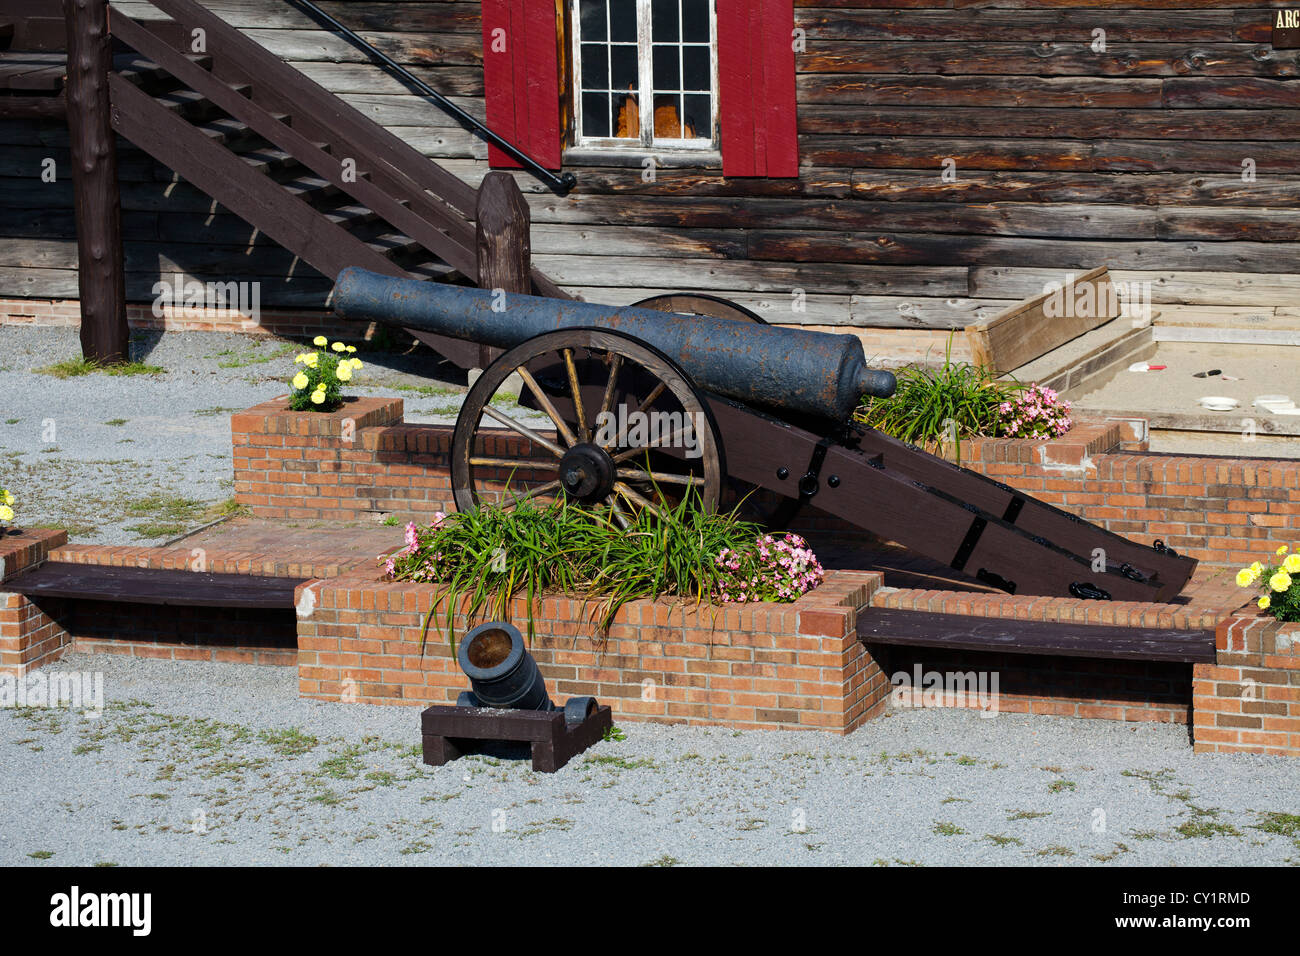 Canon Display im Fort William Henry New York Adirondack State Park Stockfoto